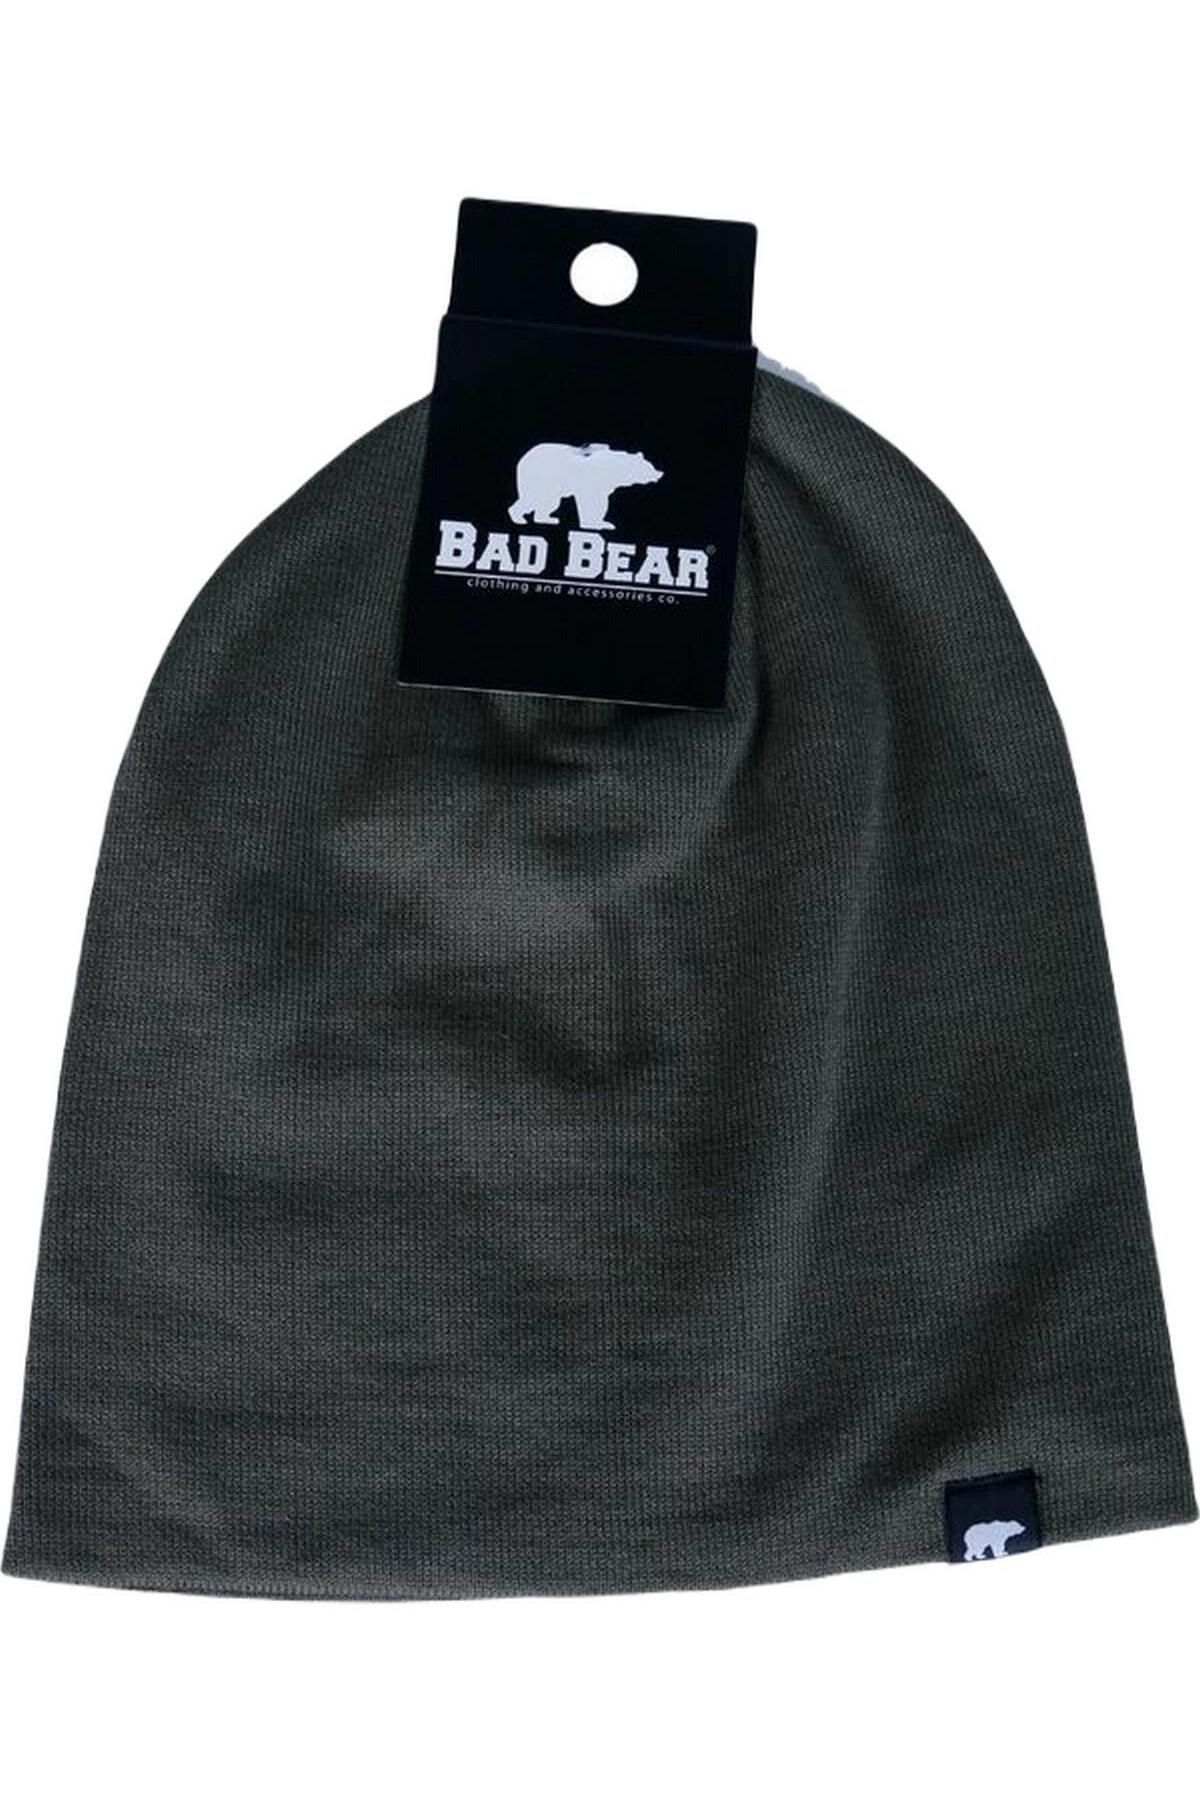 Bad Bear 18.02.04.005-c02 Simple Iı Erkek Bere